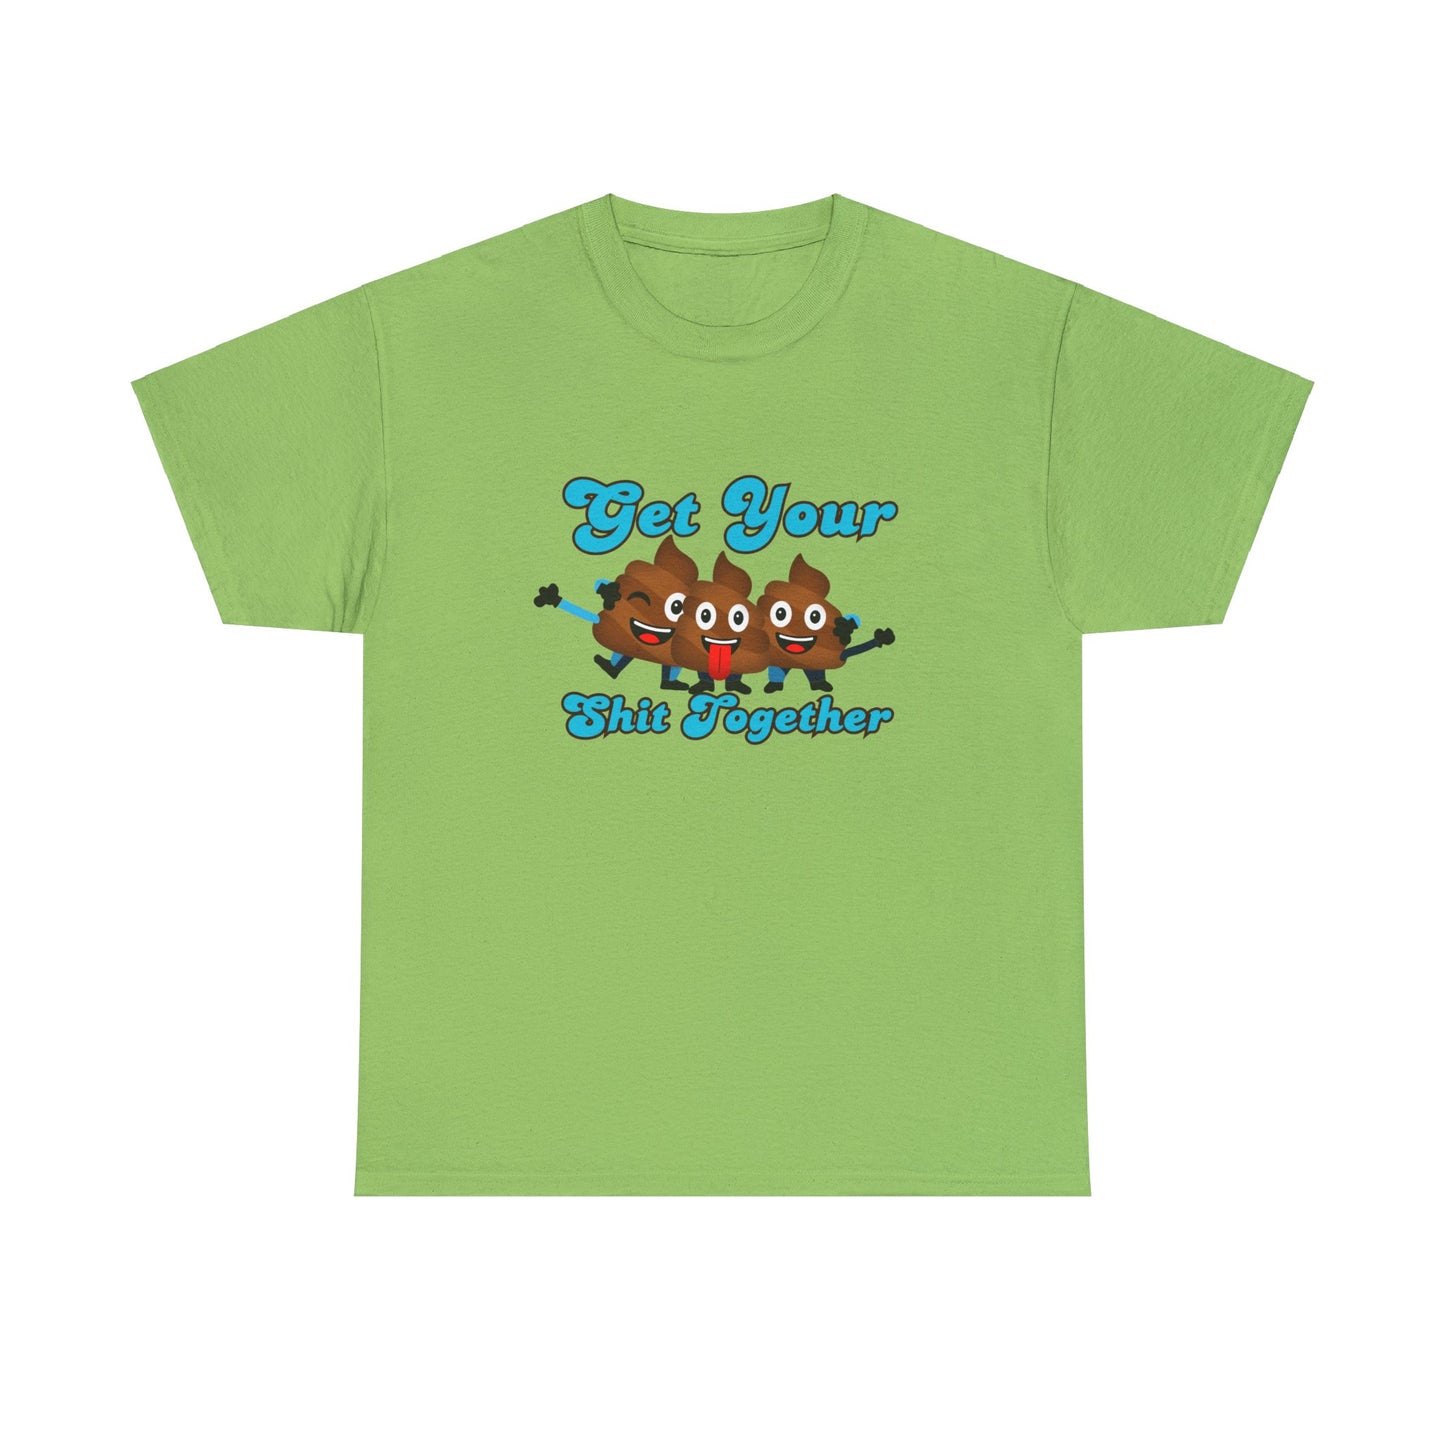 Get Your Shit Together T-Shirt, Funny Poop Emojis, play on Words, Humorous poop humor, Dad shirts, Pun t-shirt, Hilarious Poo tee Shirt